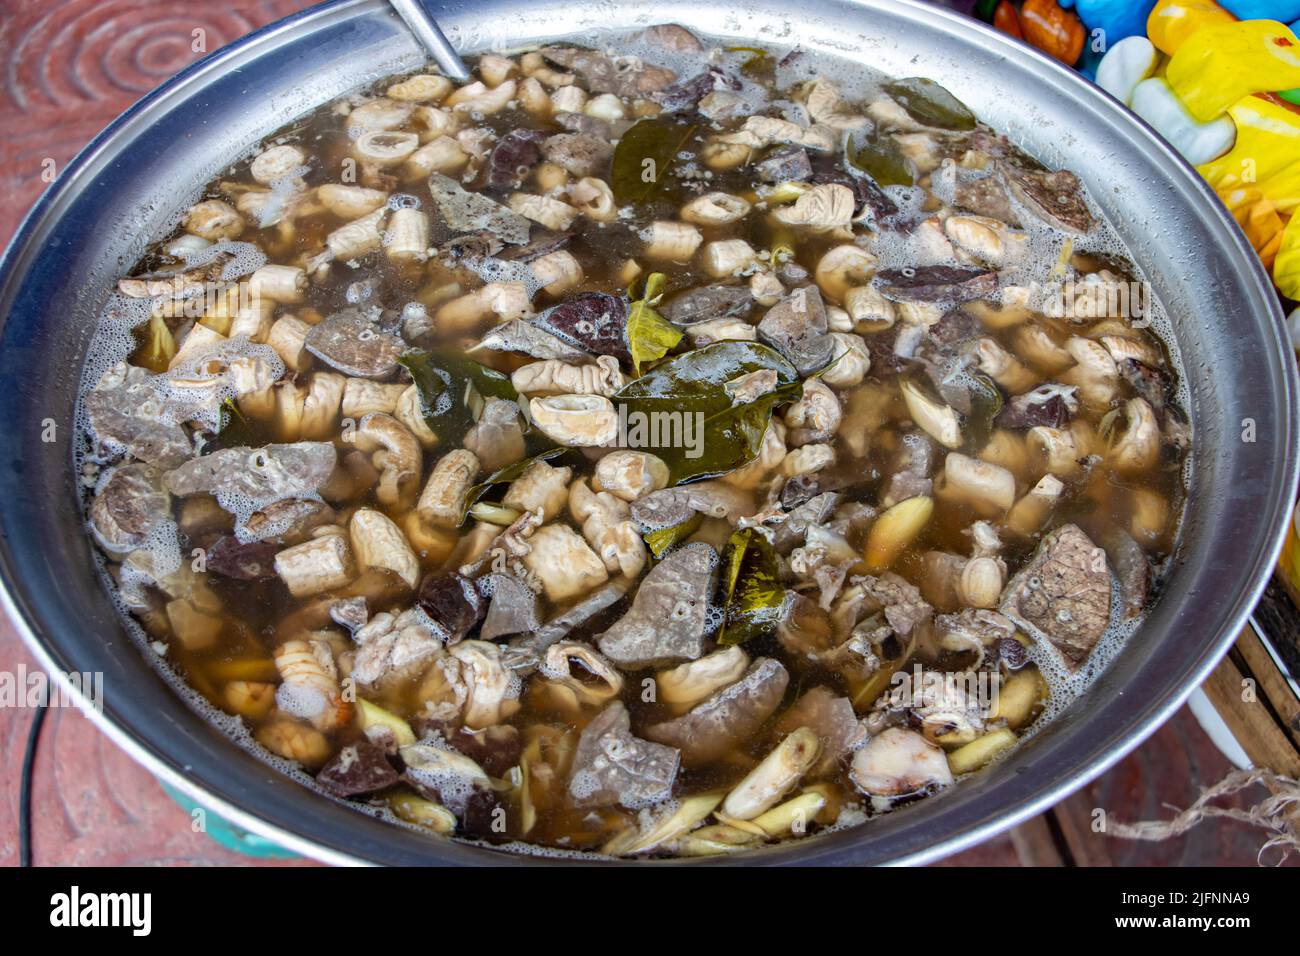 Big soup pot hi-res stock photography and images - Alamy